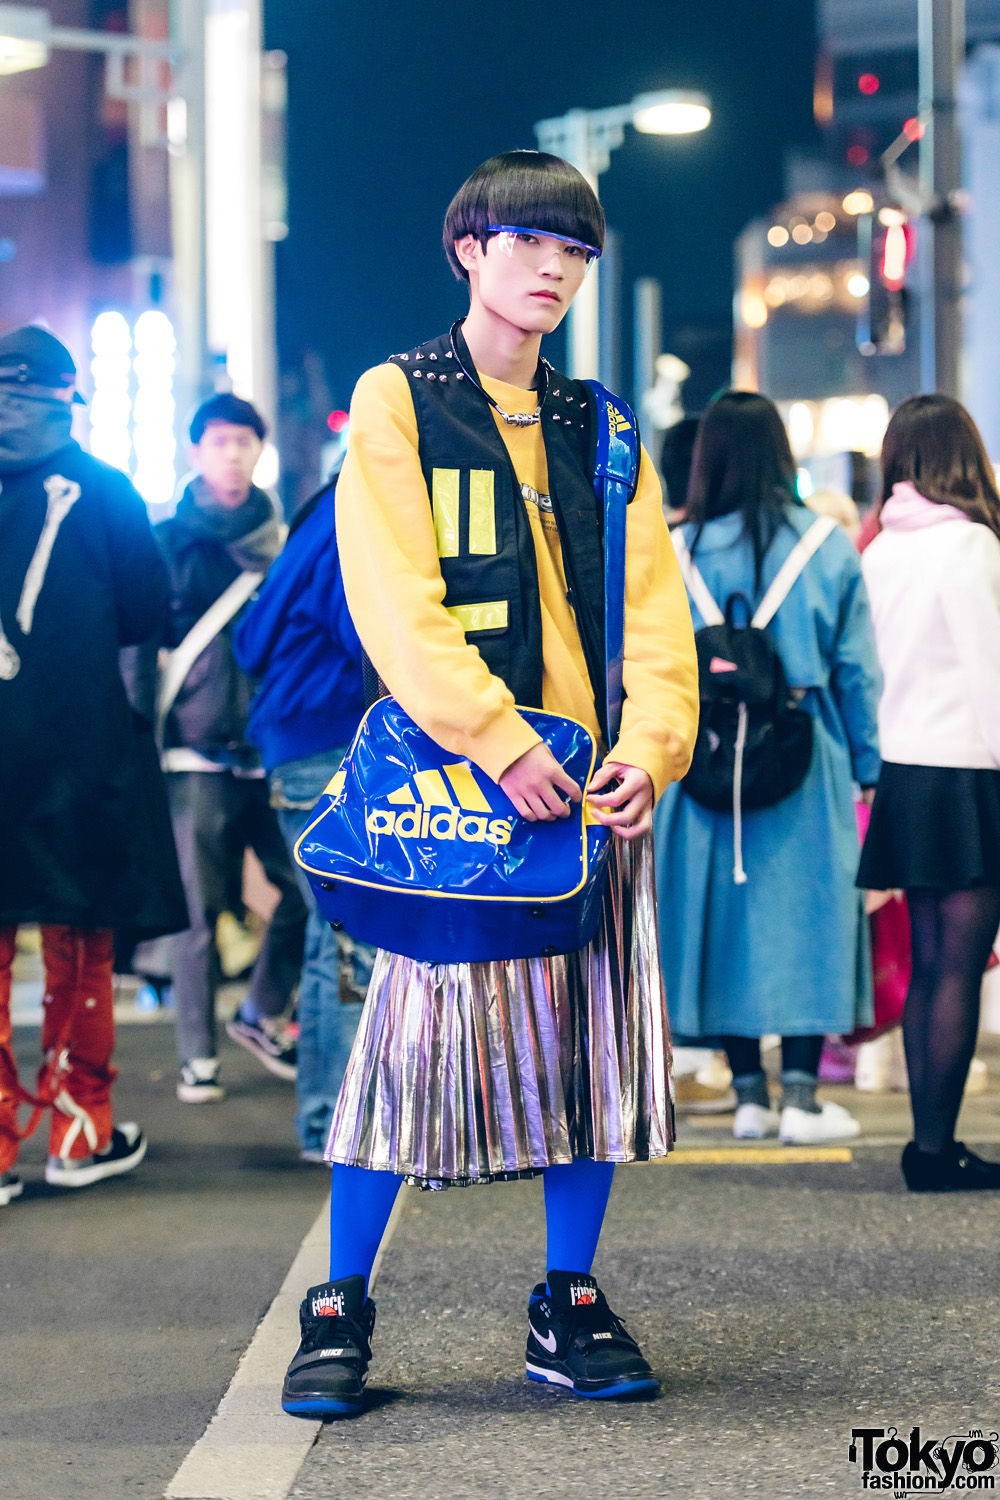 Colorful Street Fashion w/ Resale Clothing, Adidas Bag & Nike Sneakers